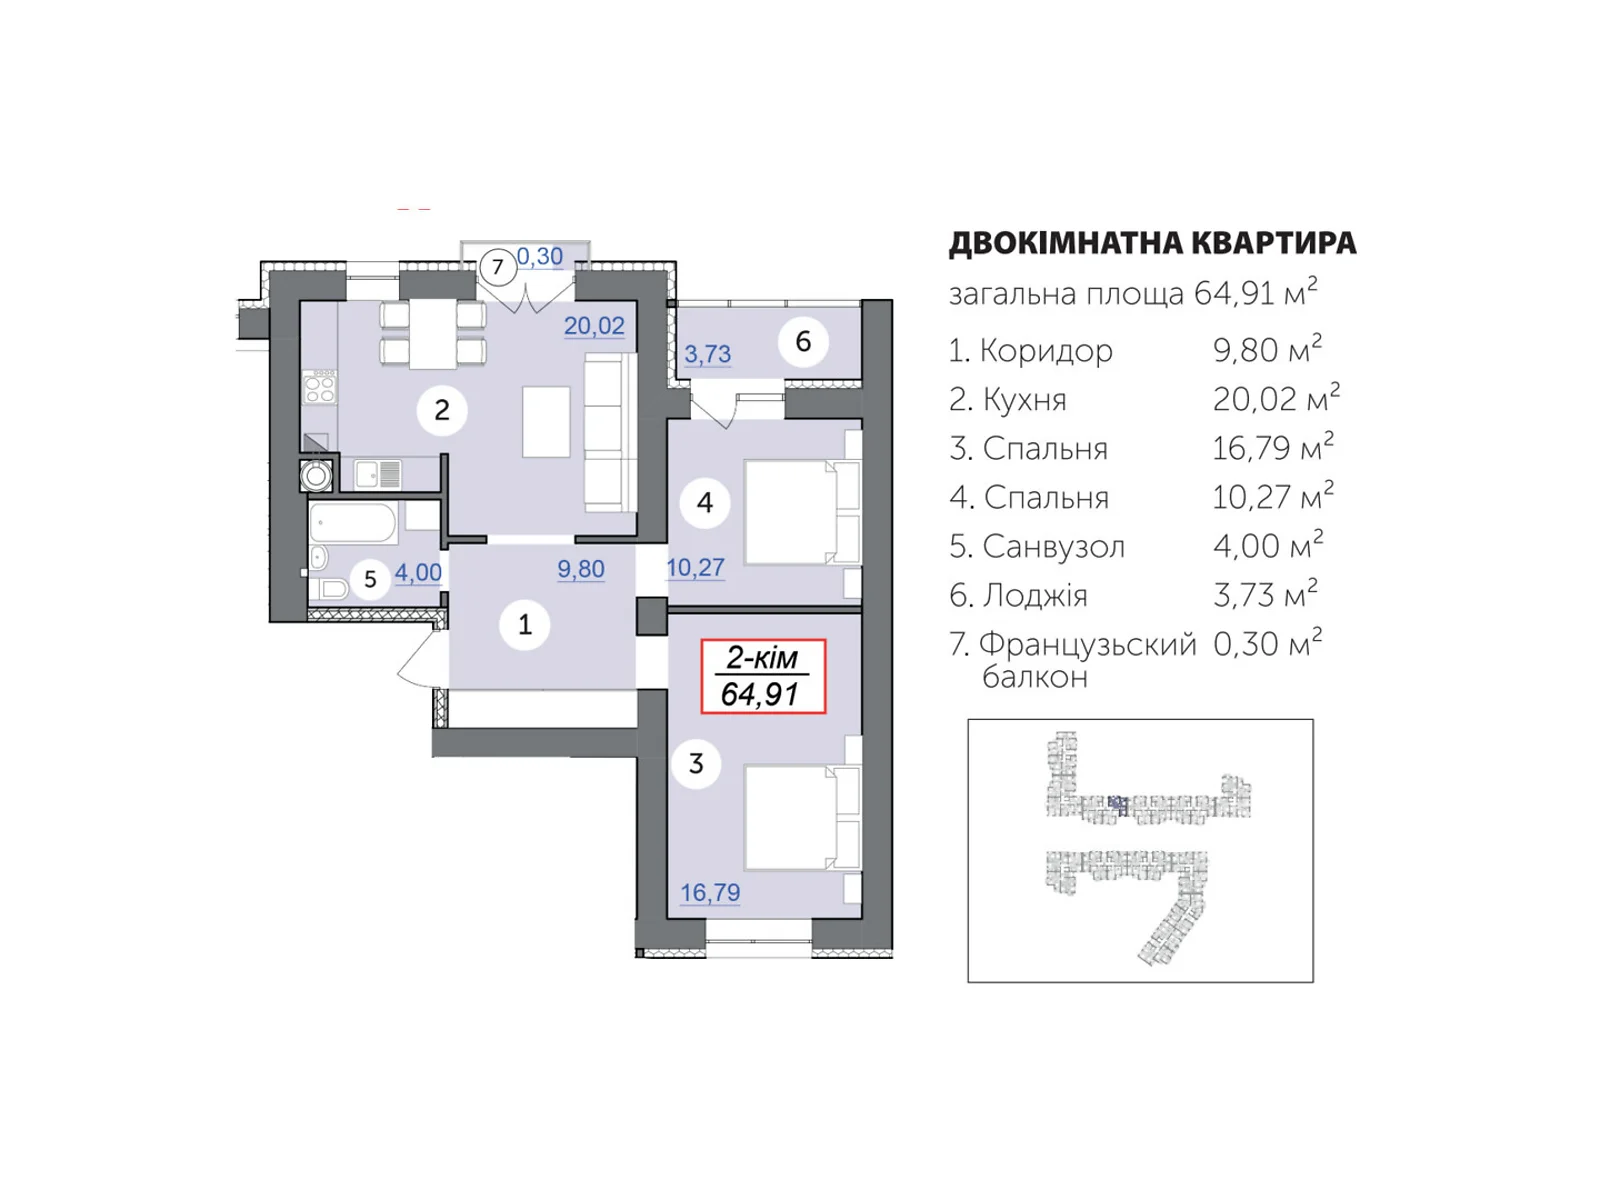 Продается 2-комнатная квартира 64.91 кв. м в Ивано-Франковске, цена: 48357 $